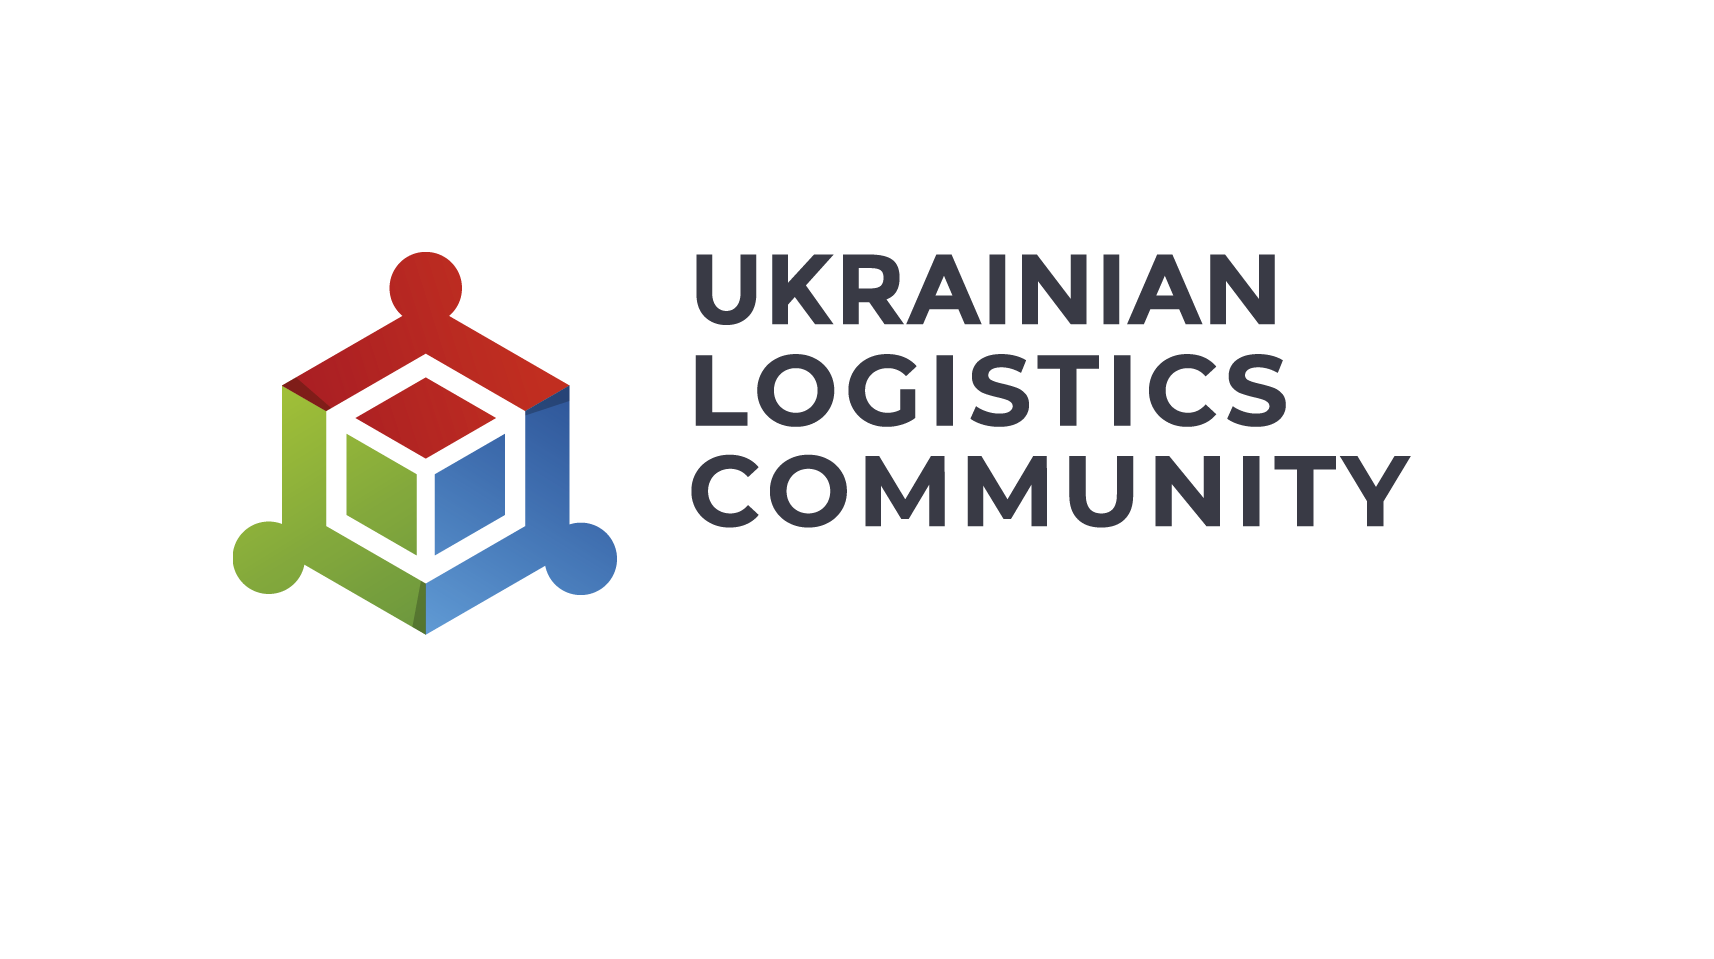 UKRAINIAN LOGISTICS COMMUNITY